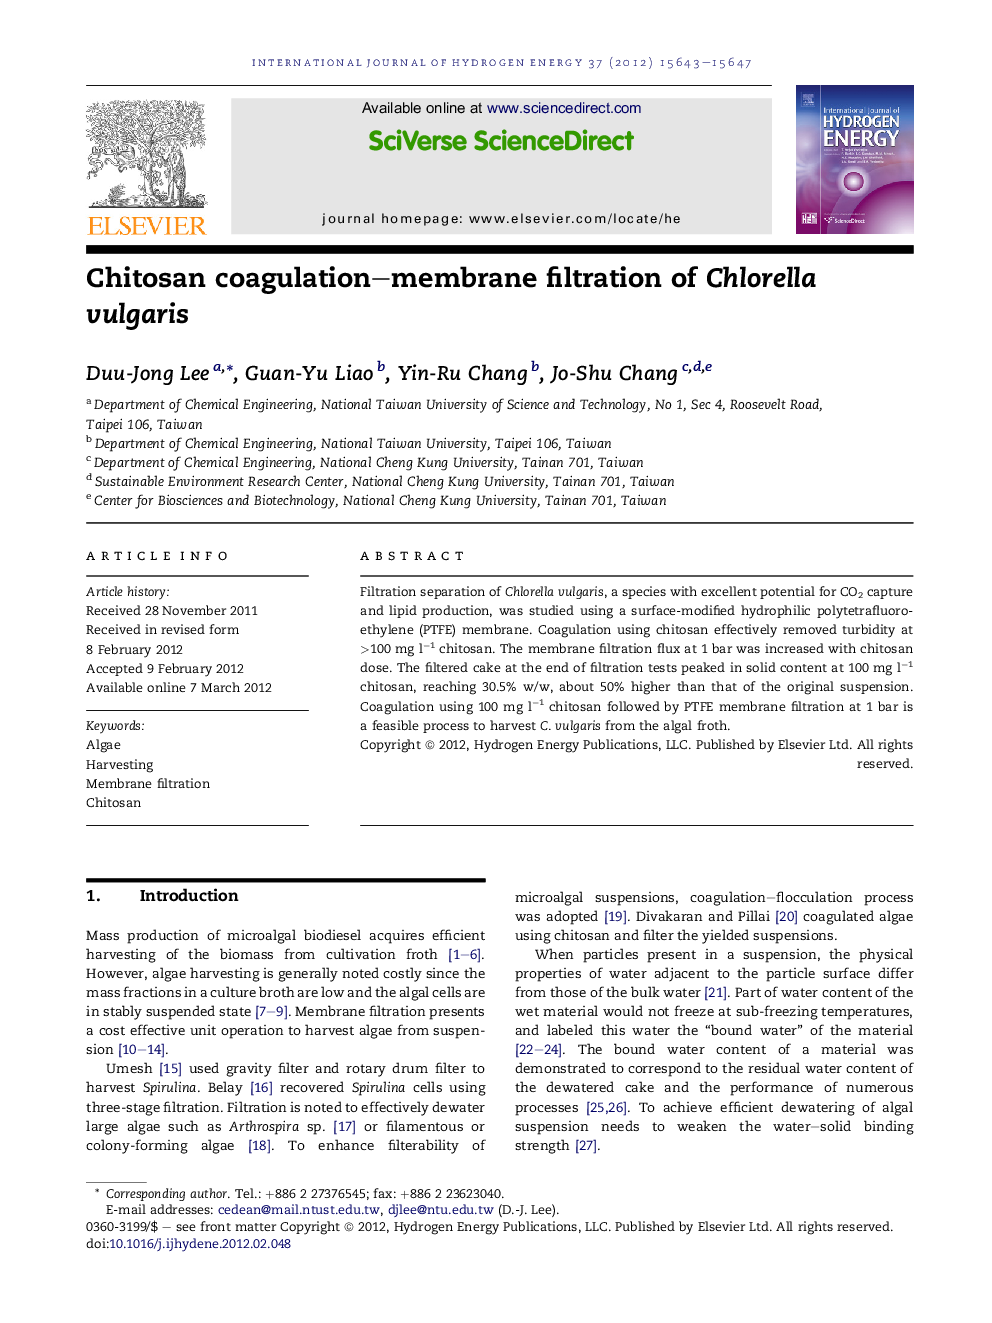 Chitosan coagulation–membrane filtration of Chlorella vulgaris